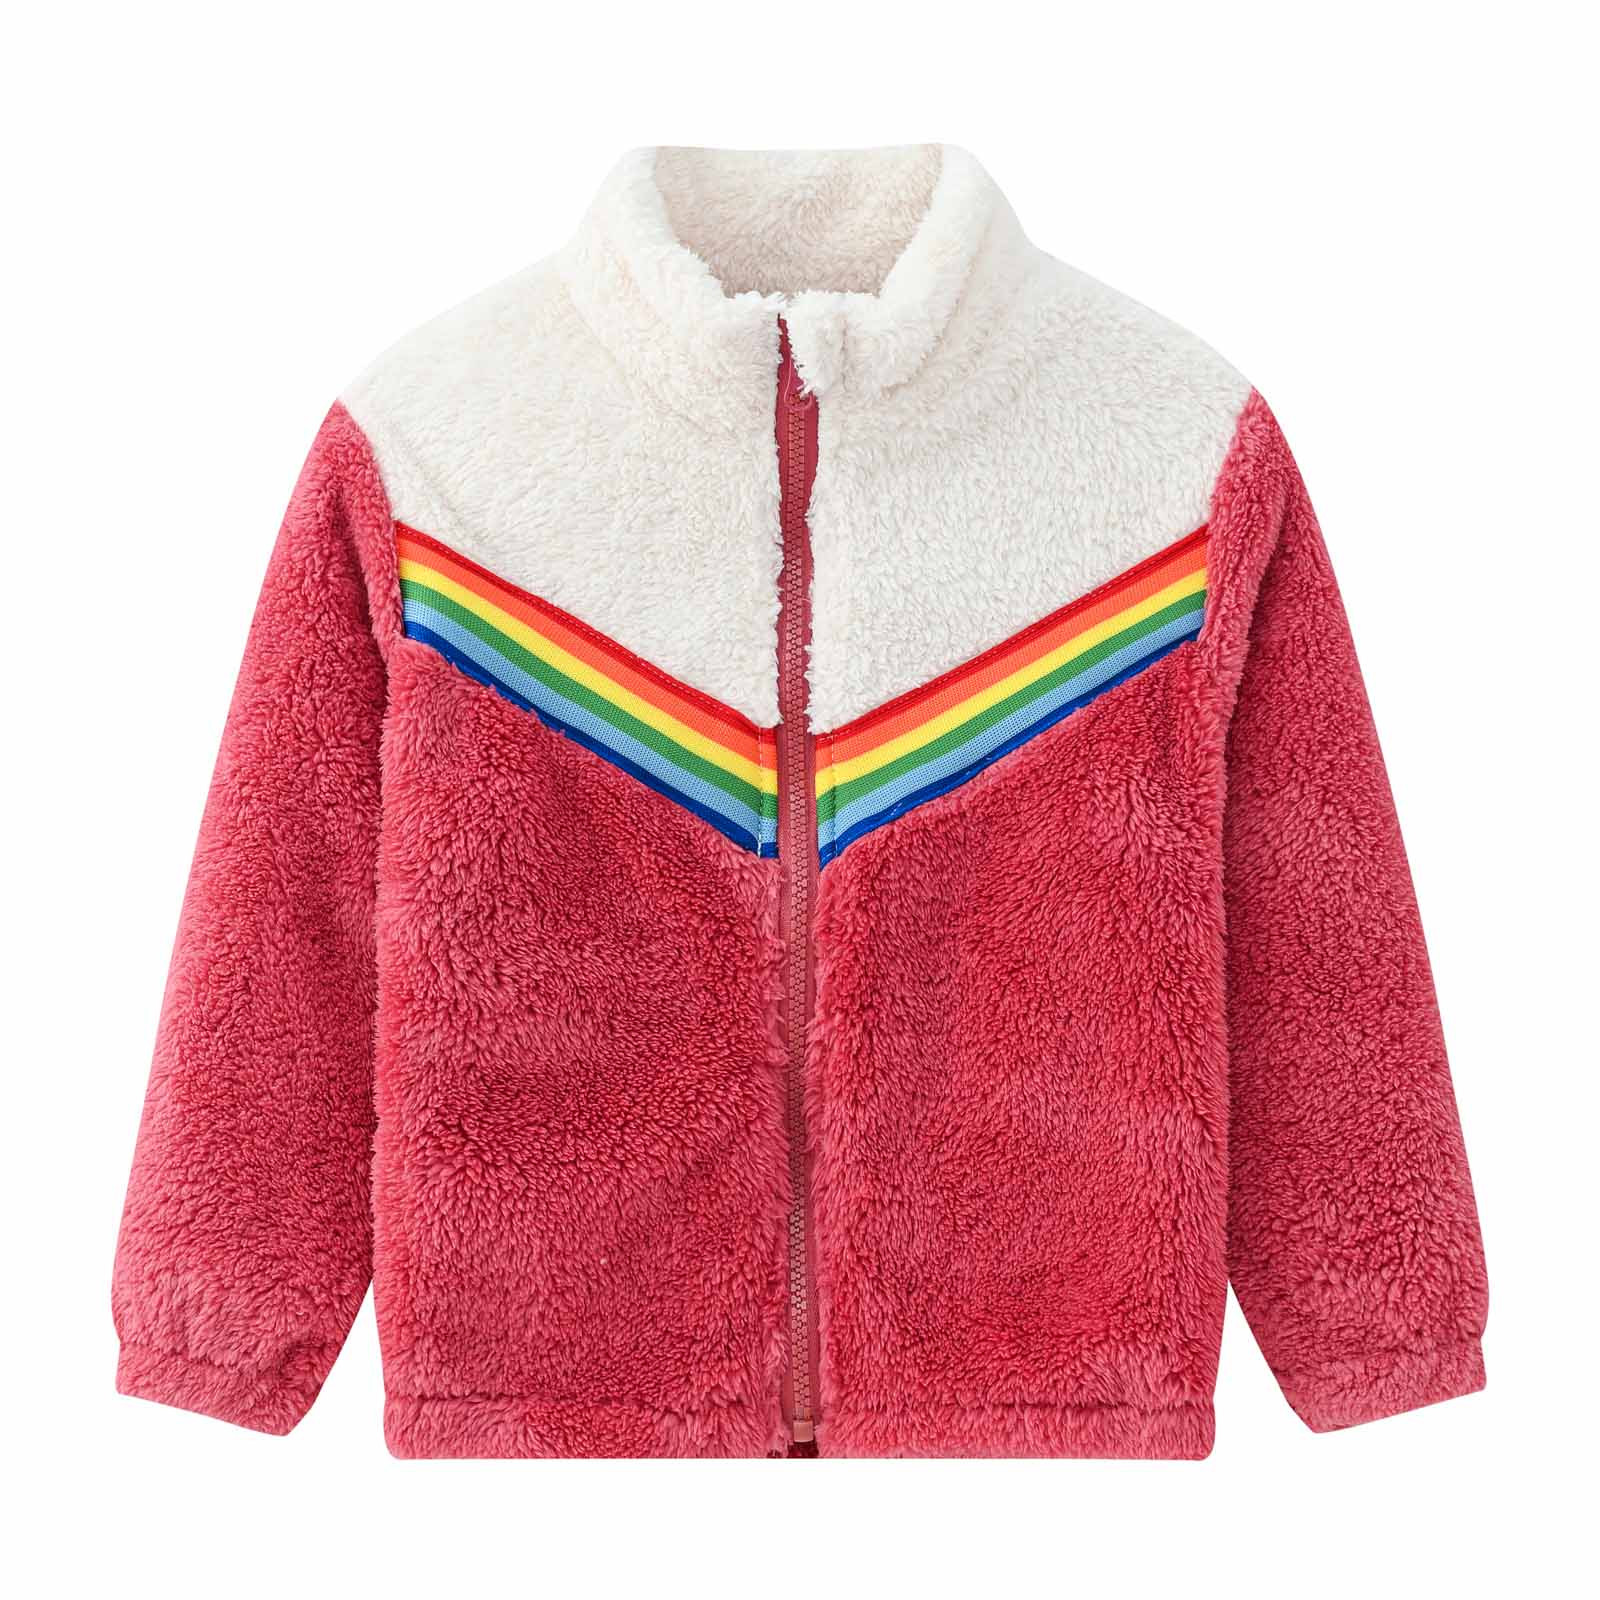 YYDGH Girls Zipper Jacket Fuzzy Sweatshirt Long Sleeve Casual Cozy Fleece Sherpa Outwear Coat Full-Zip Rainbow Jackets(Red,3-4 Years) - image 1 of 8